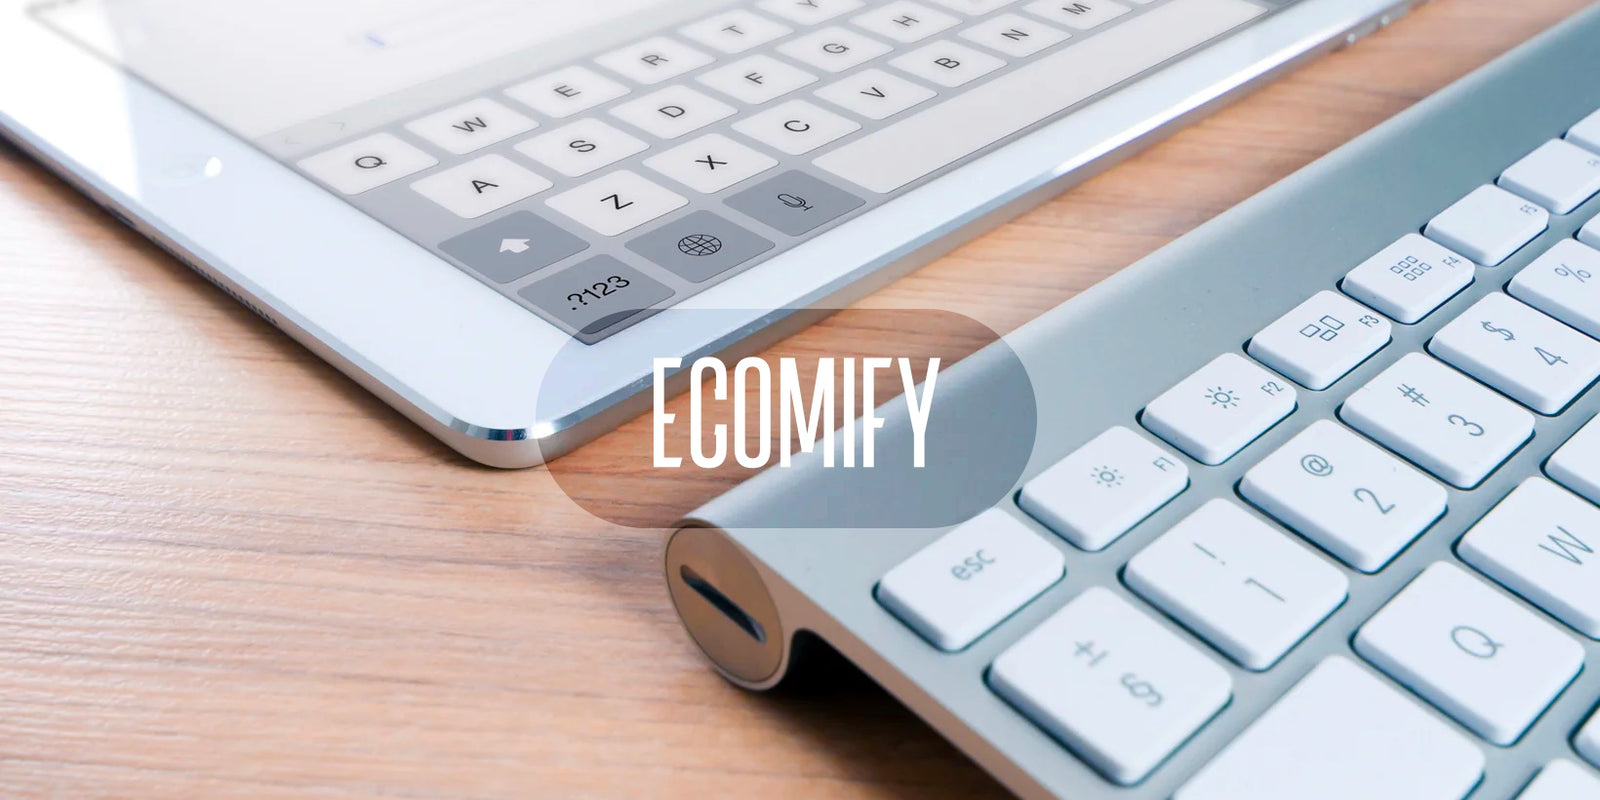 Ecomify focuses on speed